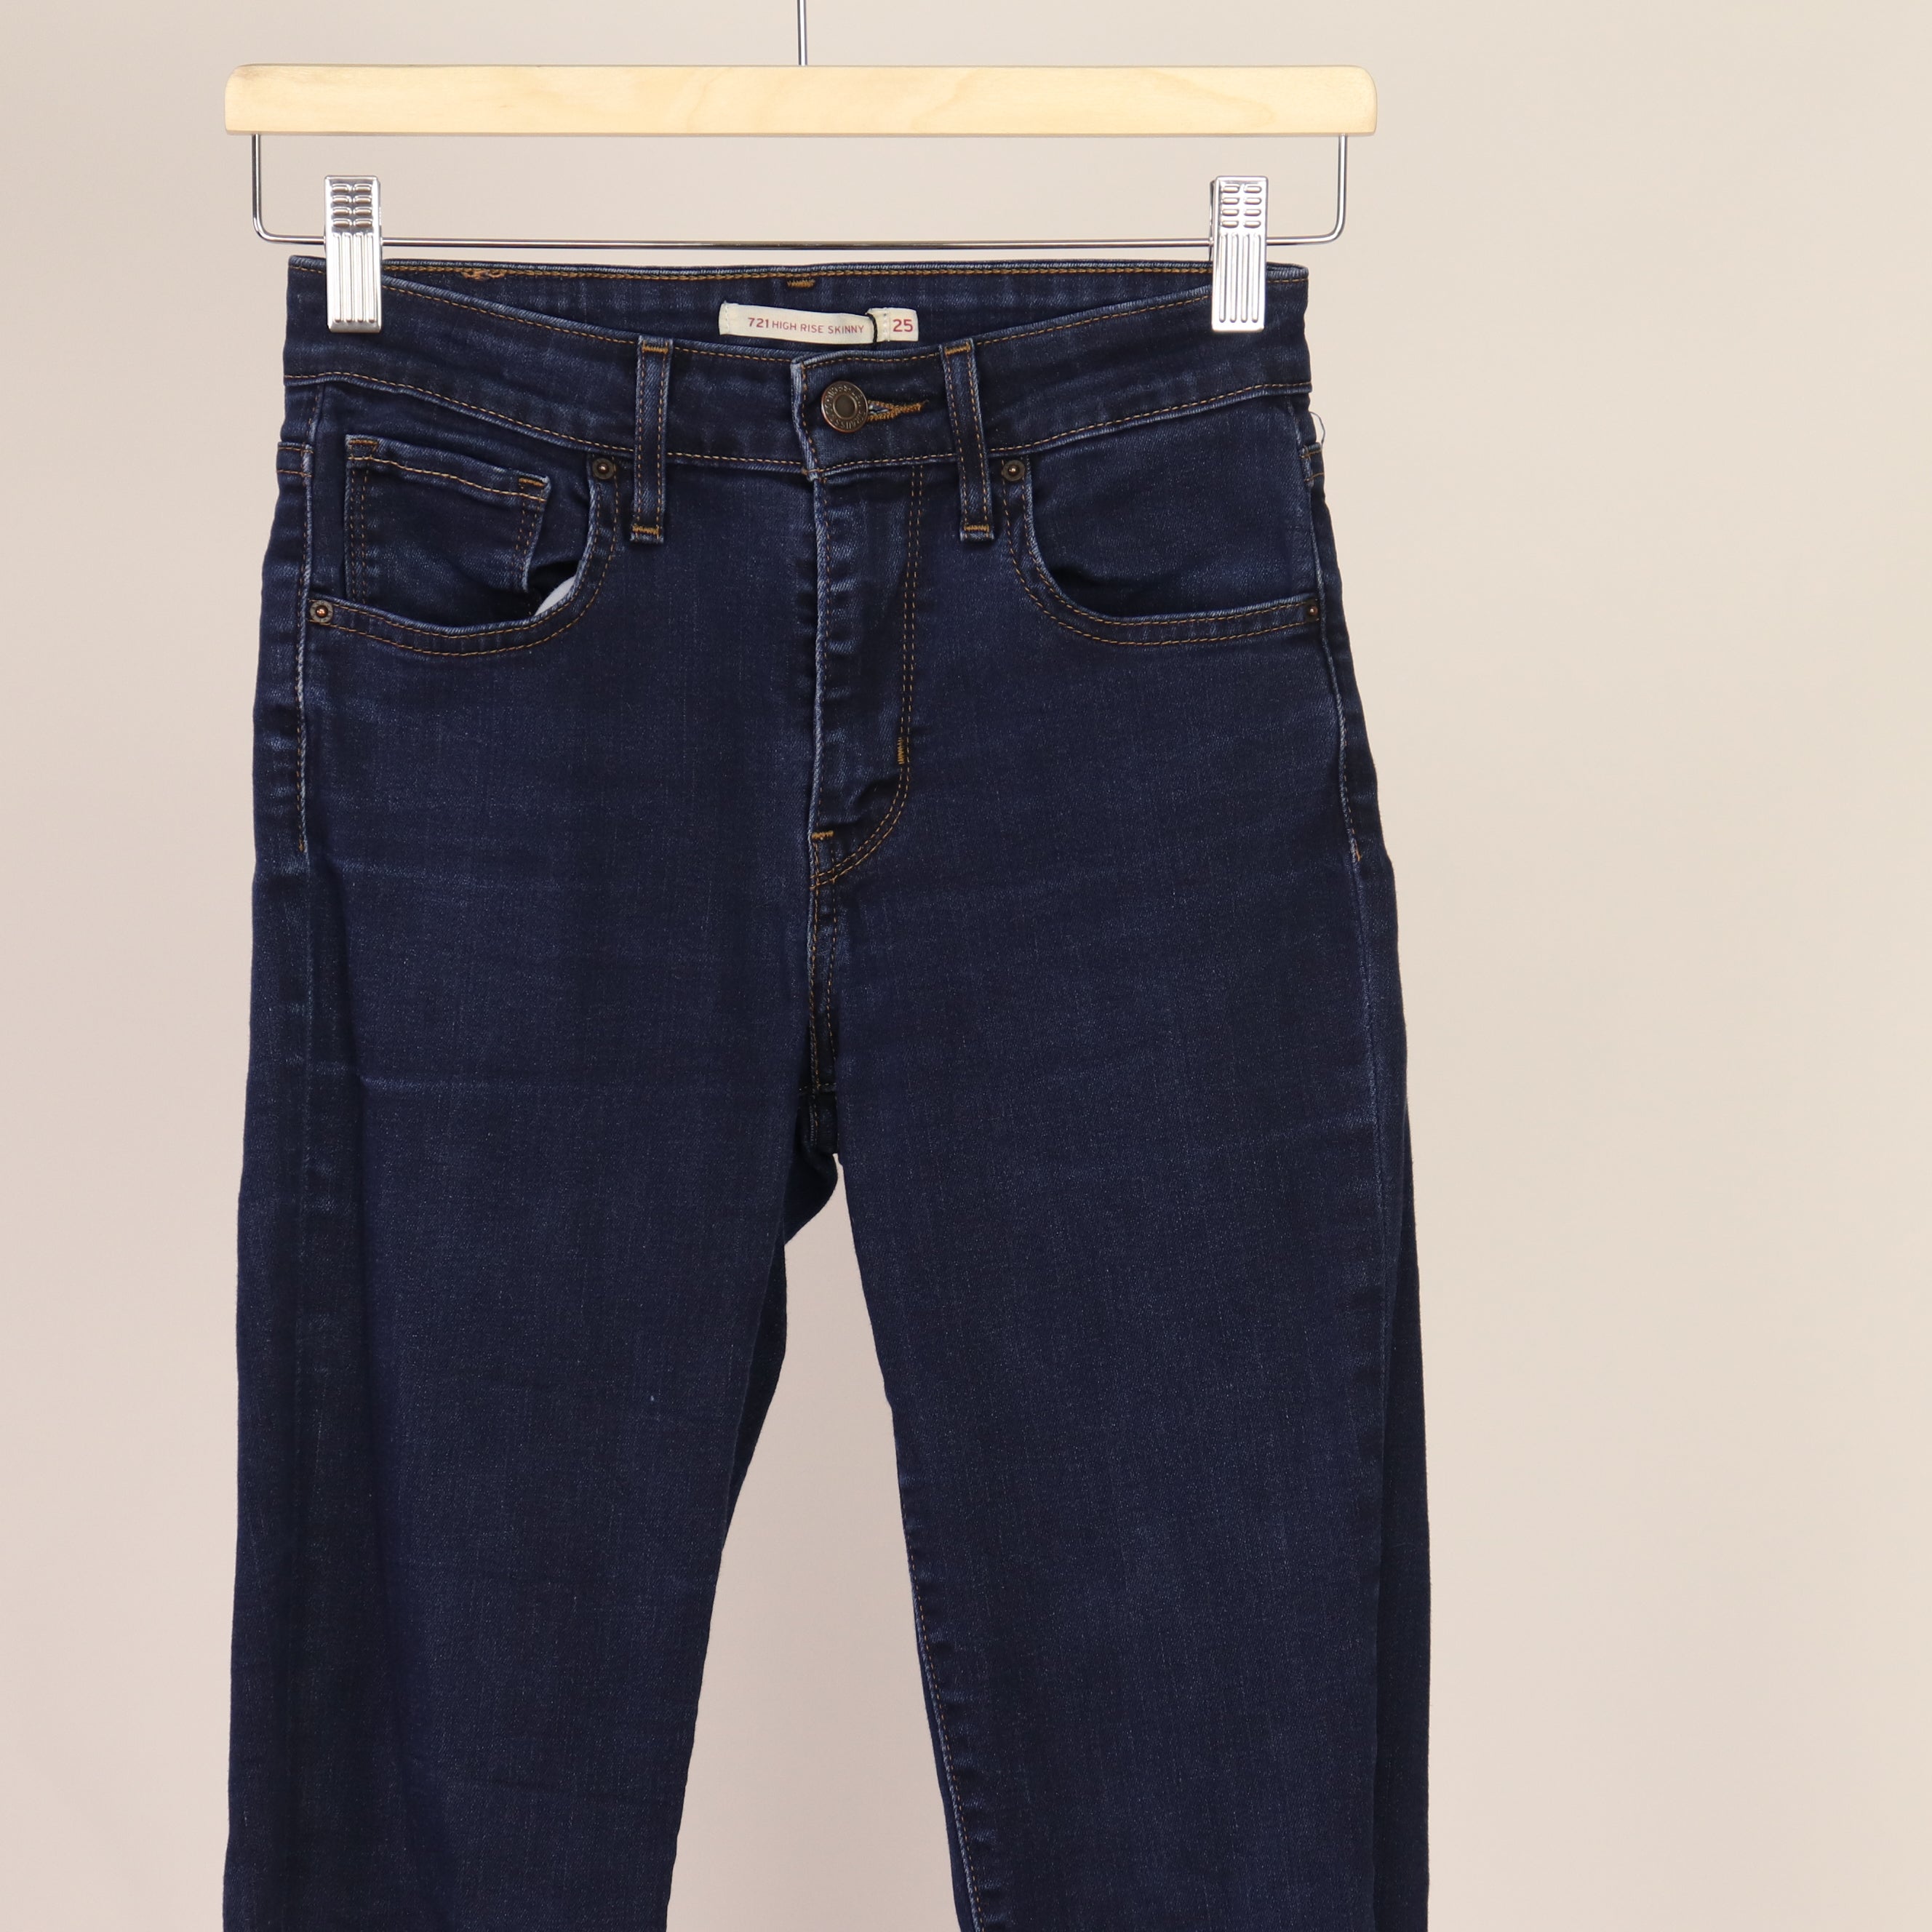 Jeans, Size 6